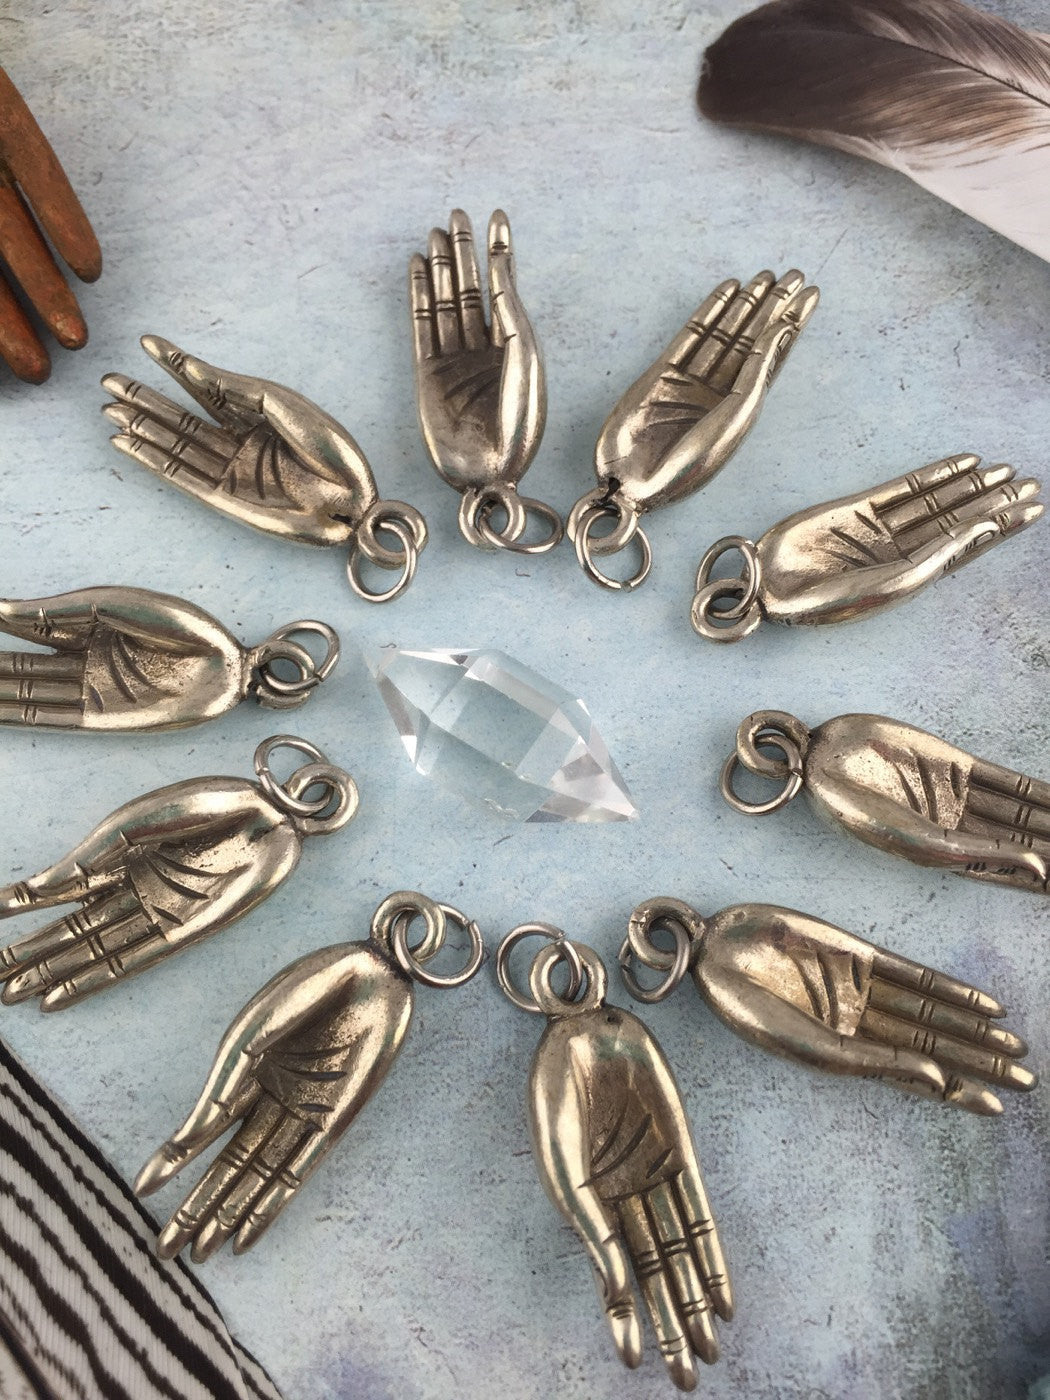 Gyan Mudra White Brass Pendant, 1 Himalayan Silver Hand Pendant, Buddhist, Yoga, Meditation, Spiritual Jewelry Making Supplies, 1 Pendant - ShopWomanShopsWorld.com. Bone Beads, Tassels, Pom Poms, African Beads.